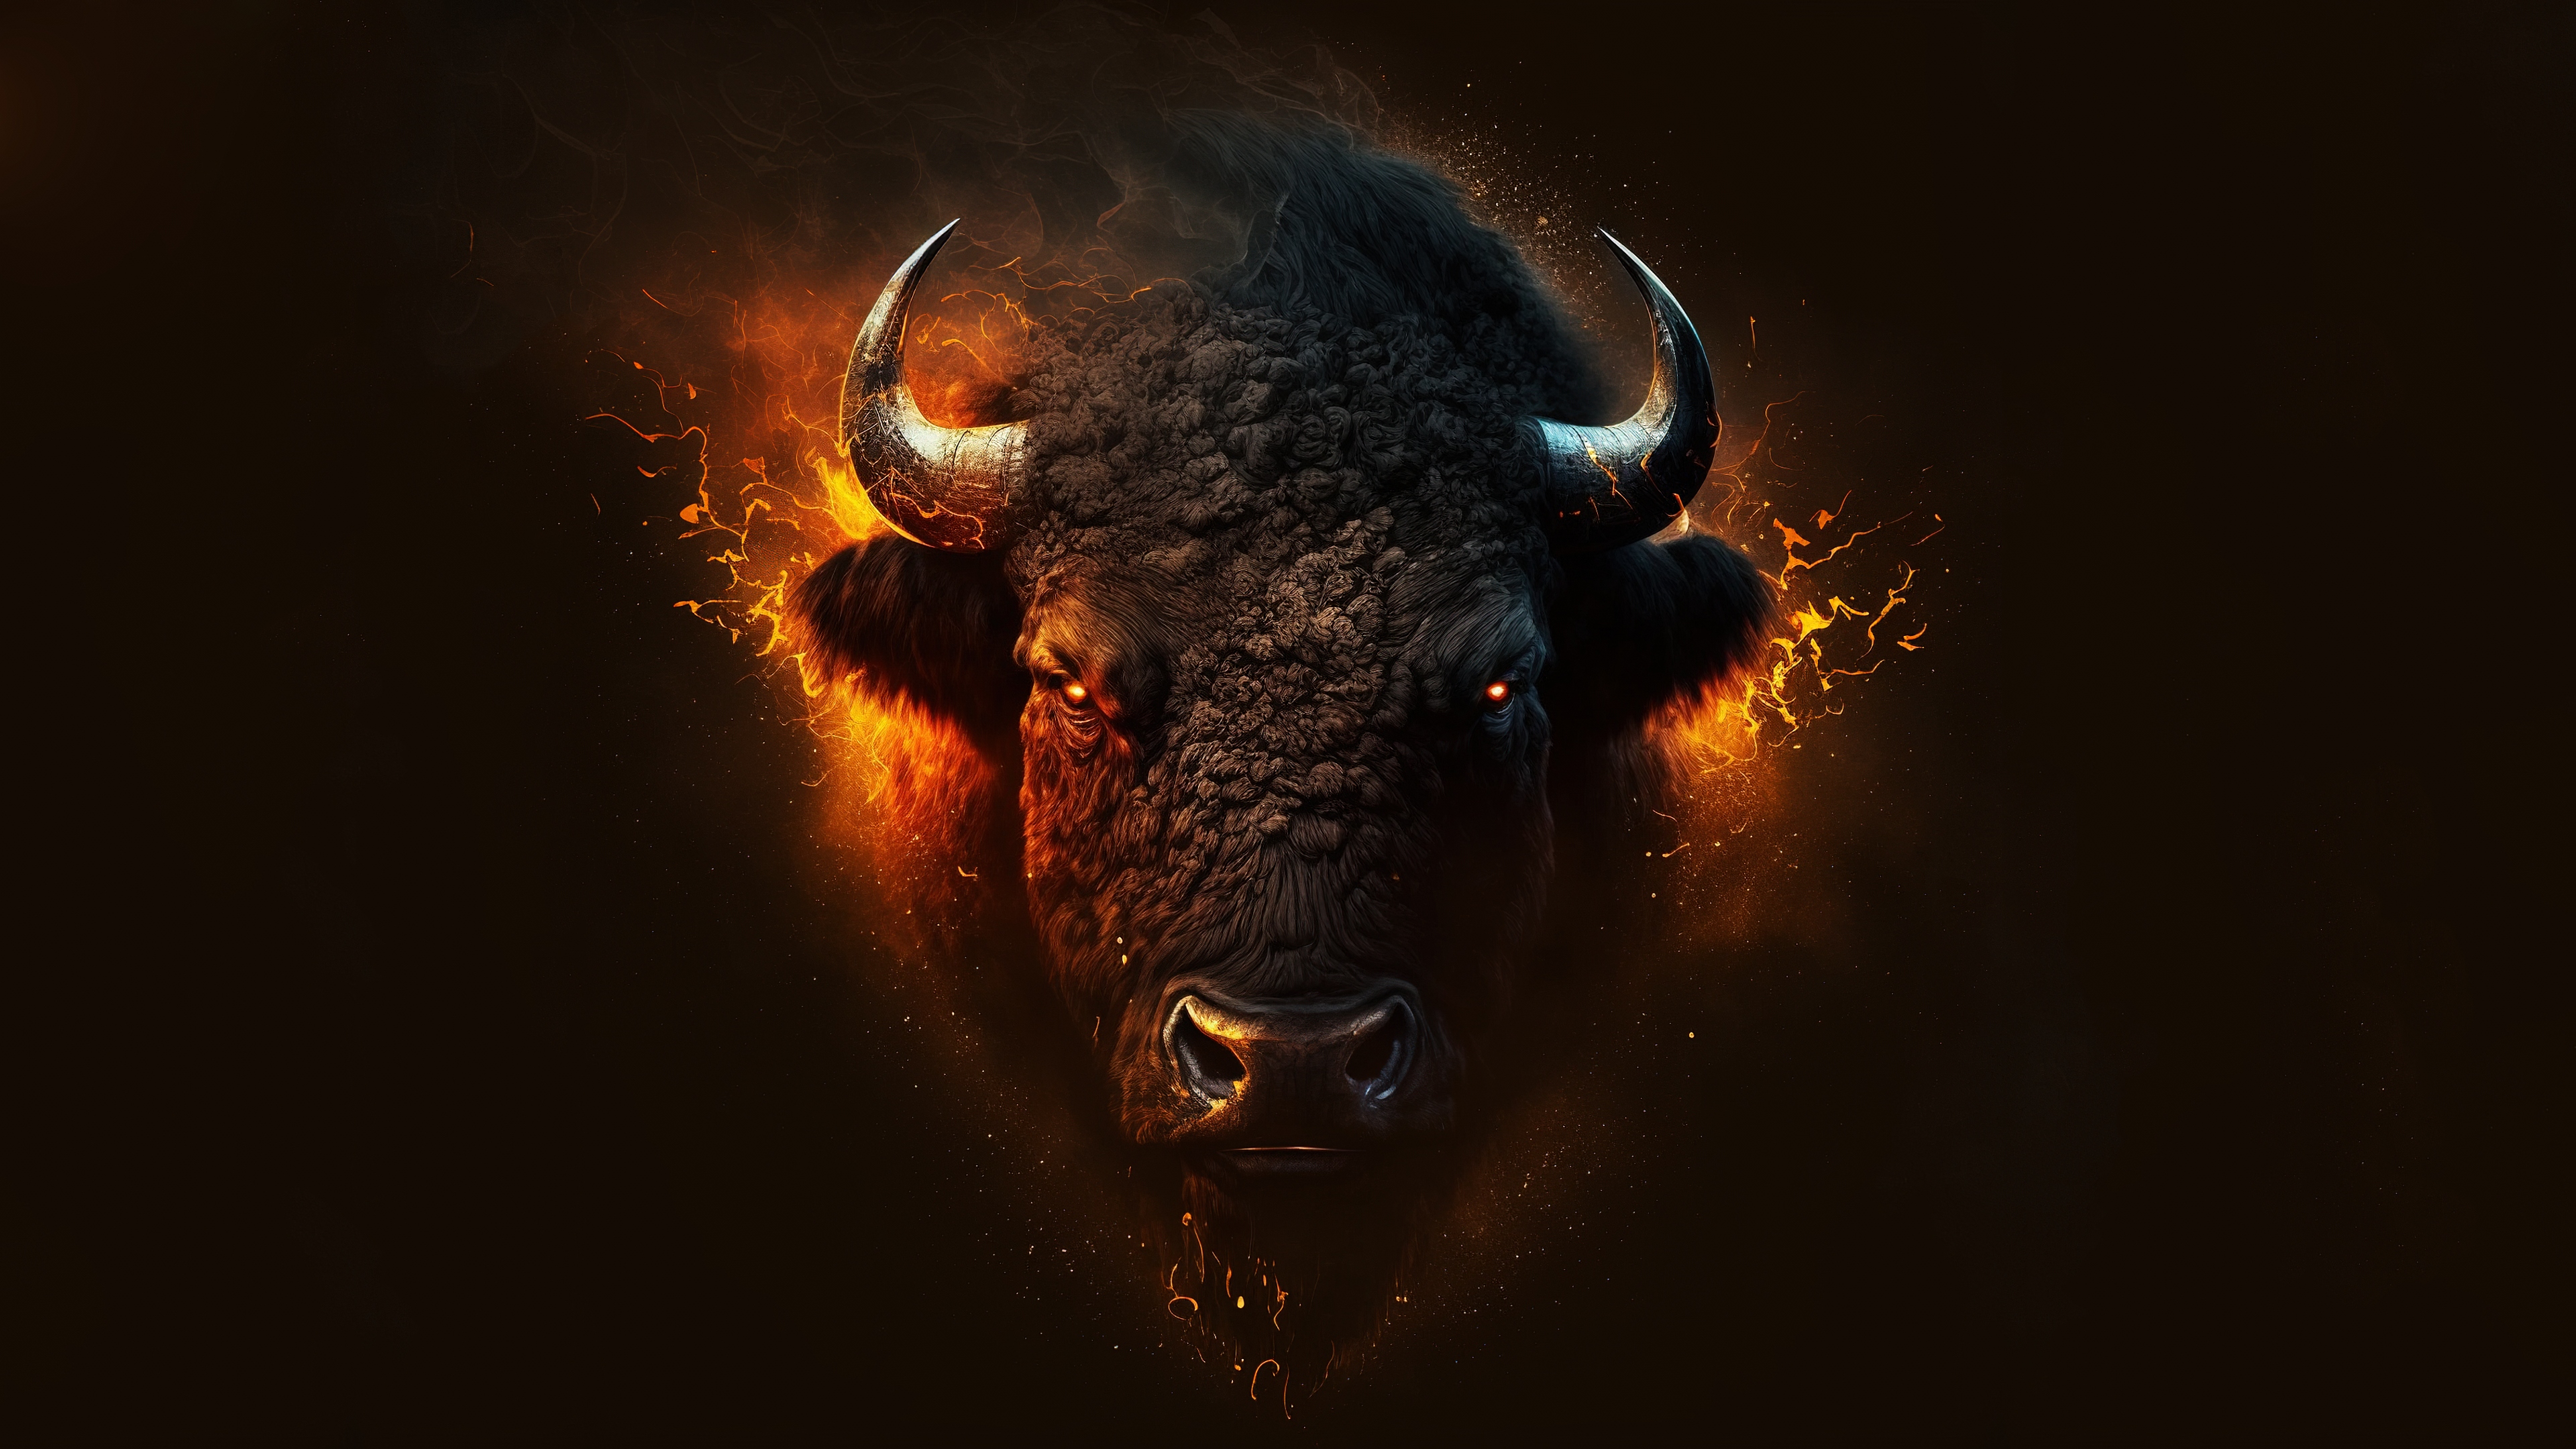 Wallpaper ID 226757  buffalo animal field and horns hd 4k wallpaper free  download